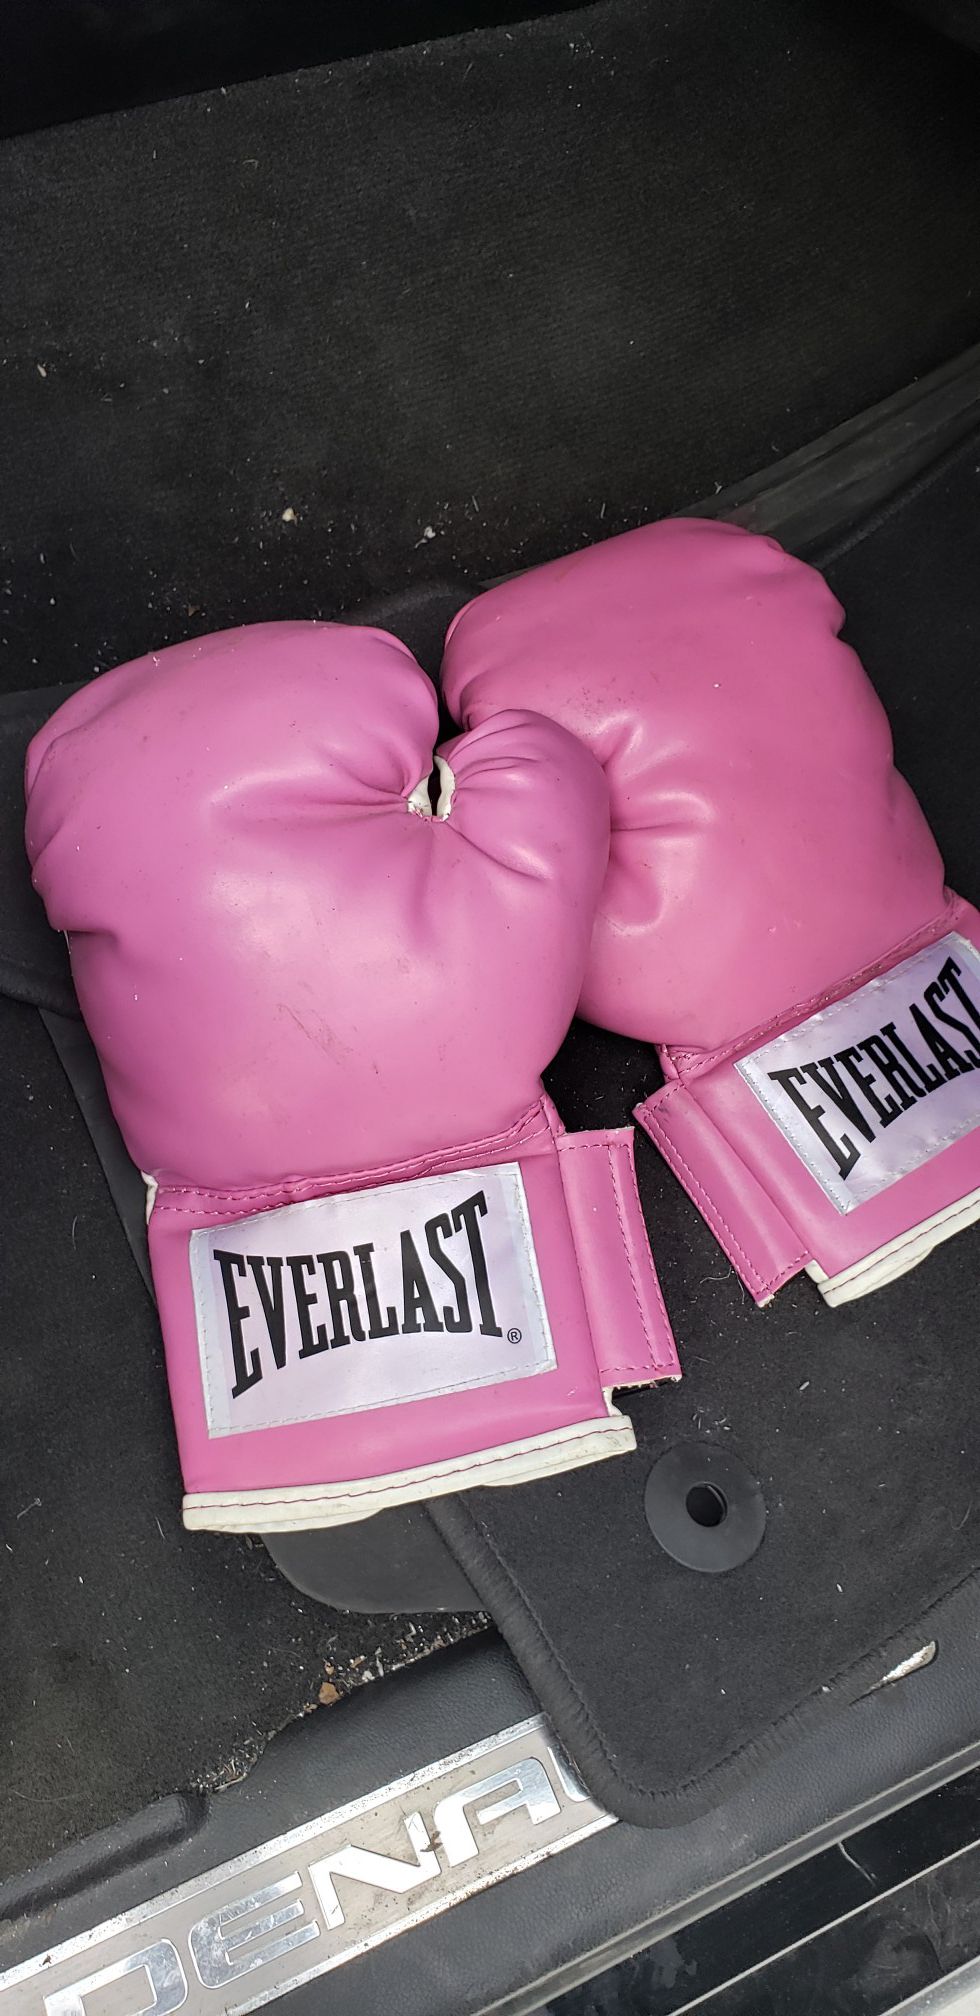 Boxing/training gloves